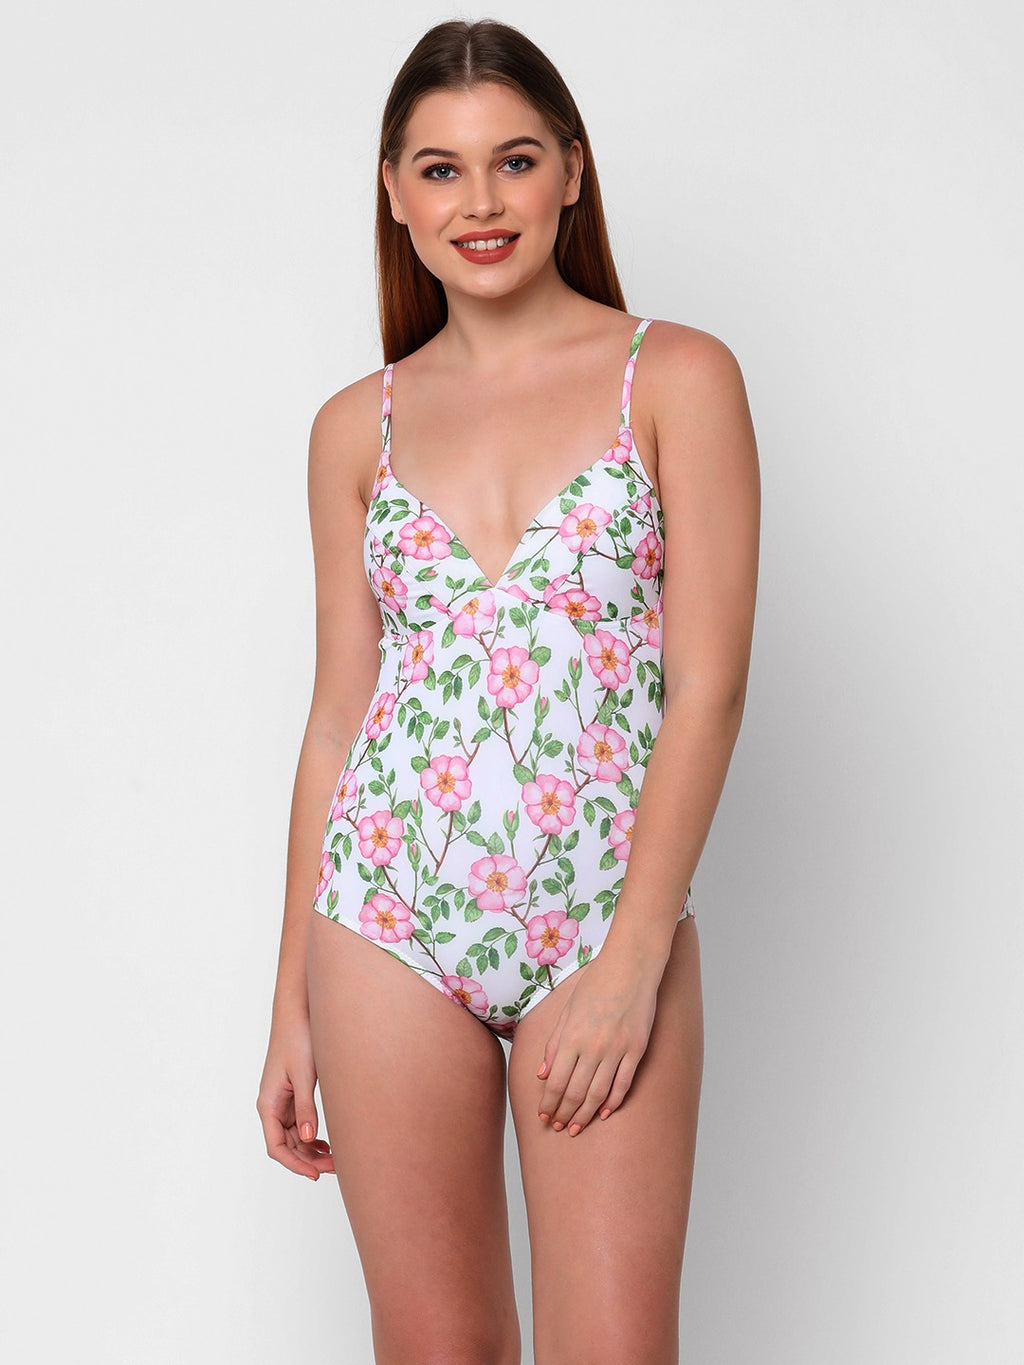 Esha Lal Swimwear women's floral print one piece swimsuit